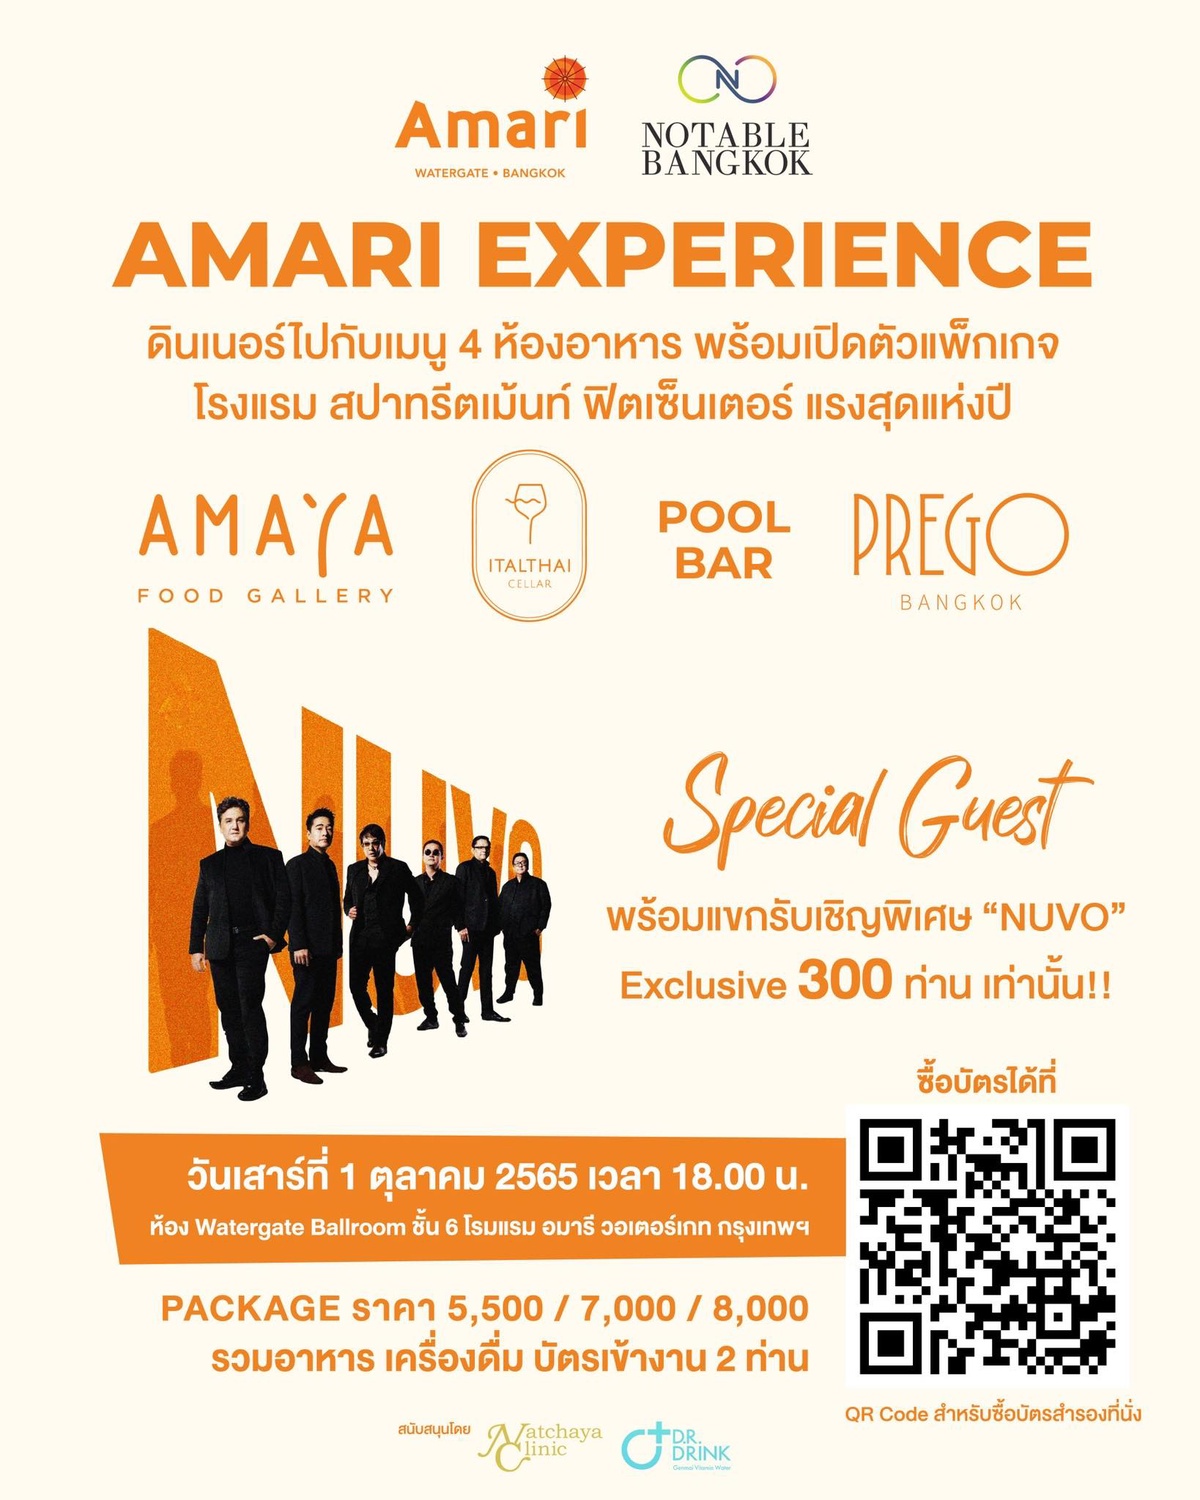 Amari x NotableBangkok จัด Amari Experience เปิดประสบการณ์พิเศษที่ โรงแรมอมารี วอเตอร์เกท กรุงเทพฯ